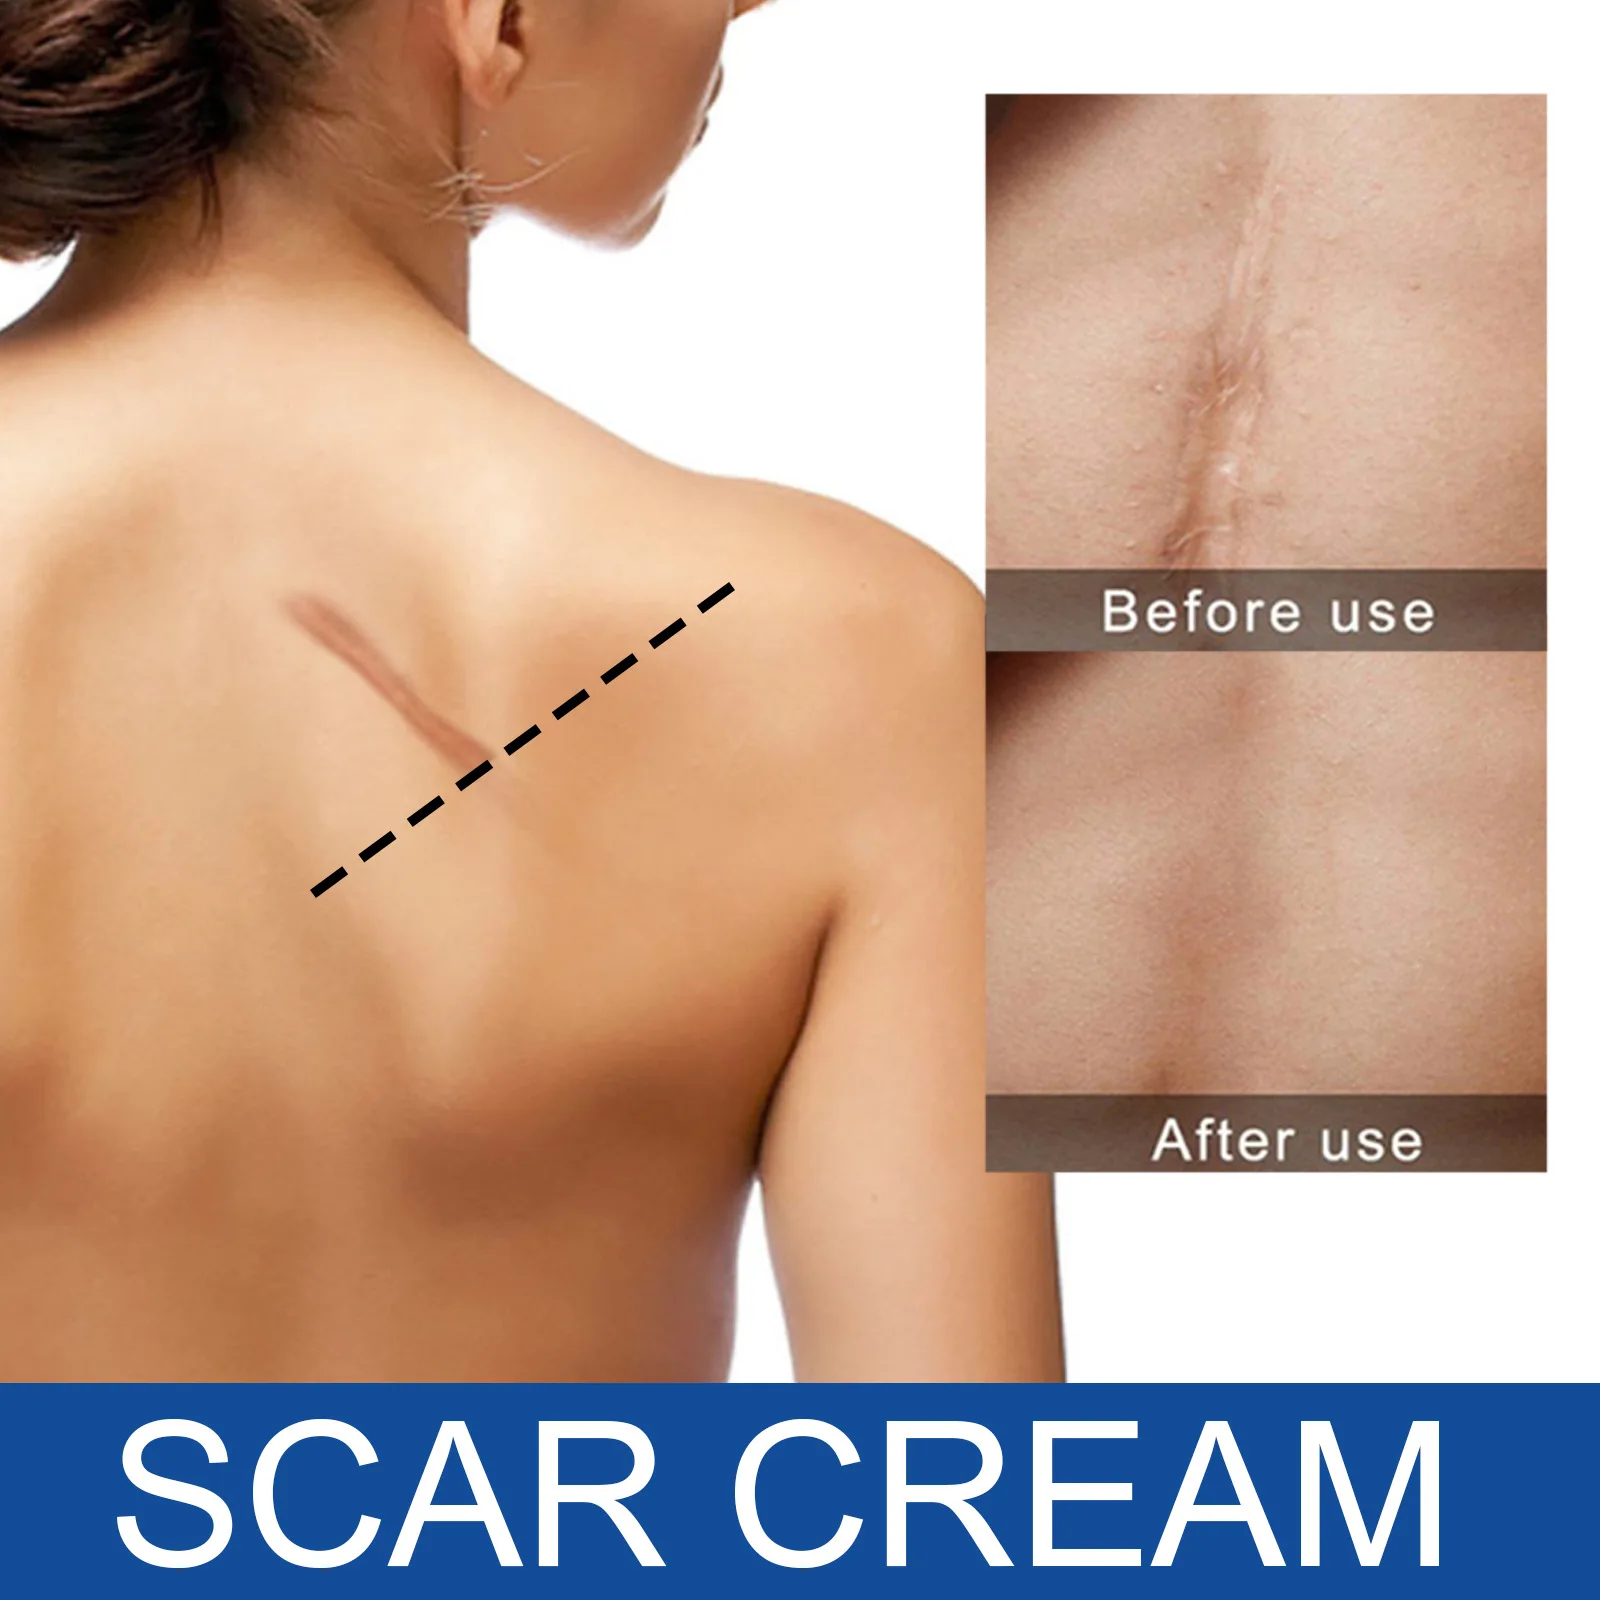 Desalt scar repair cream scald burn old scar acne mark operation scar smooth skin scar repair desalt cream skin repair cream